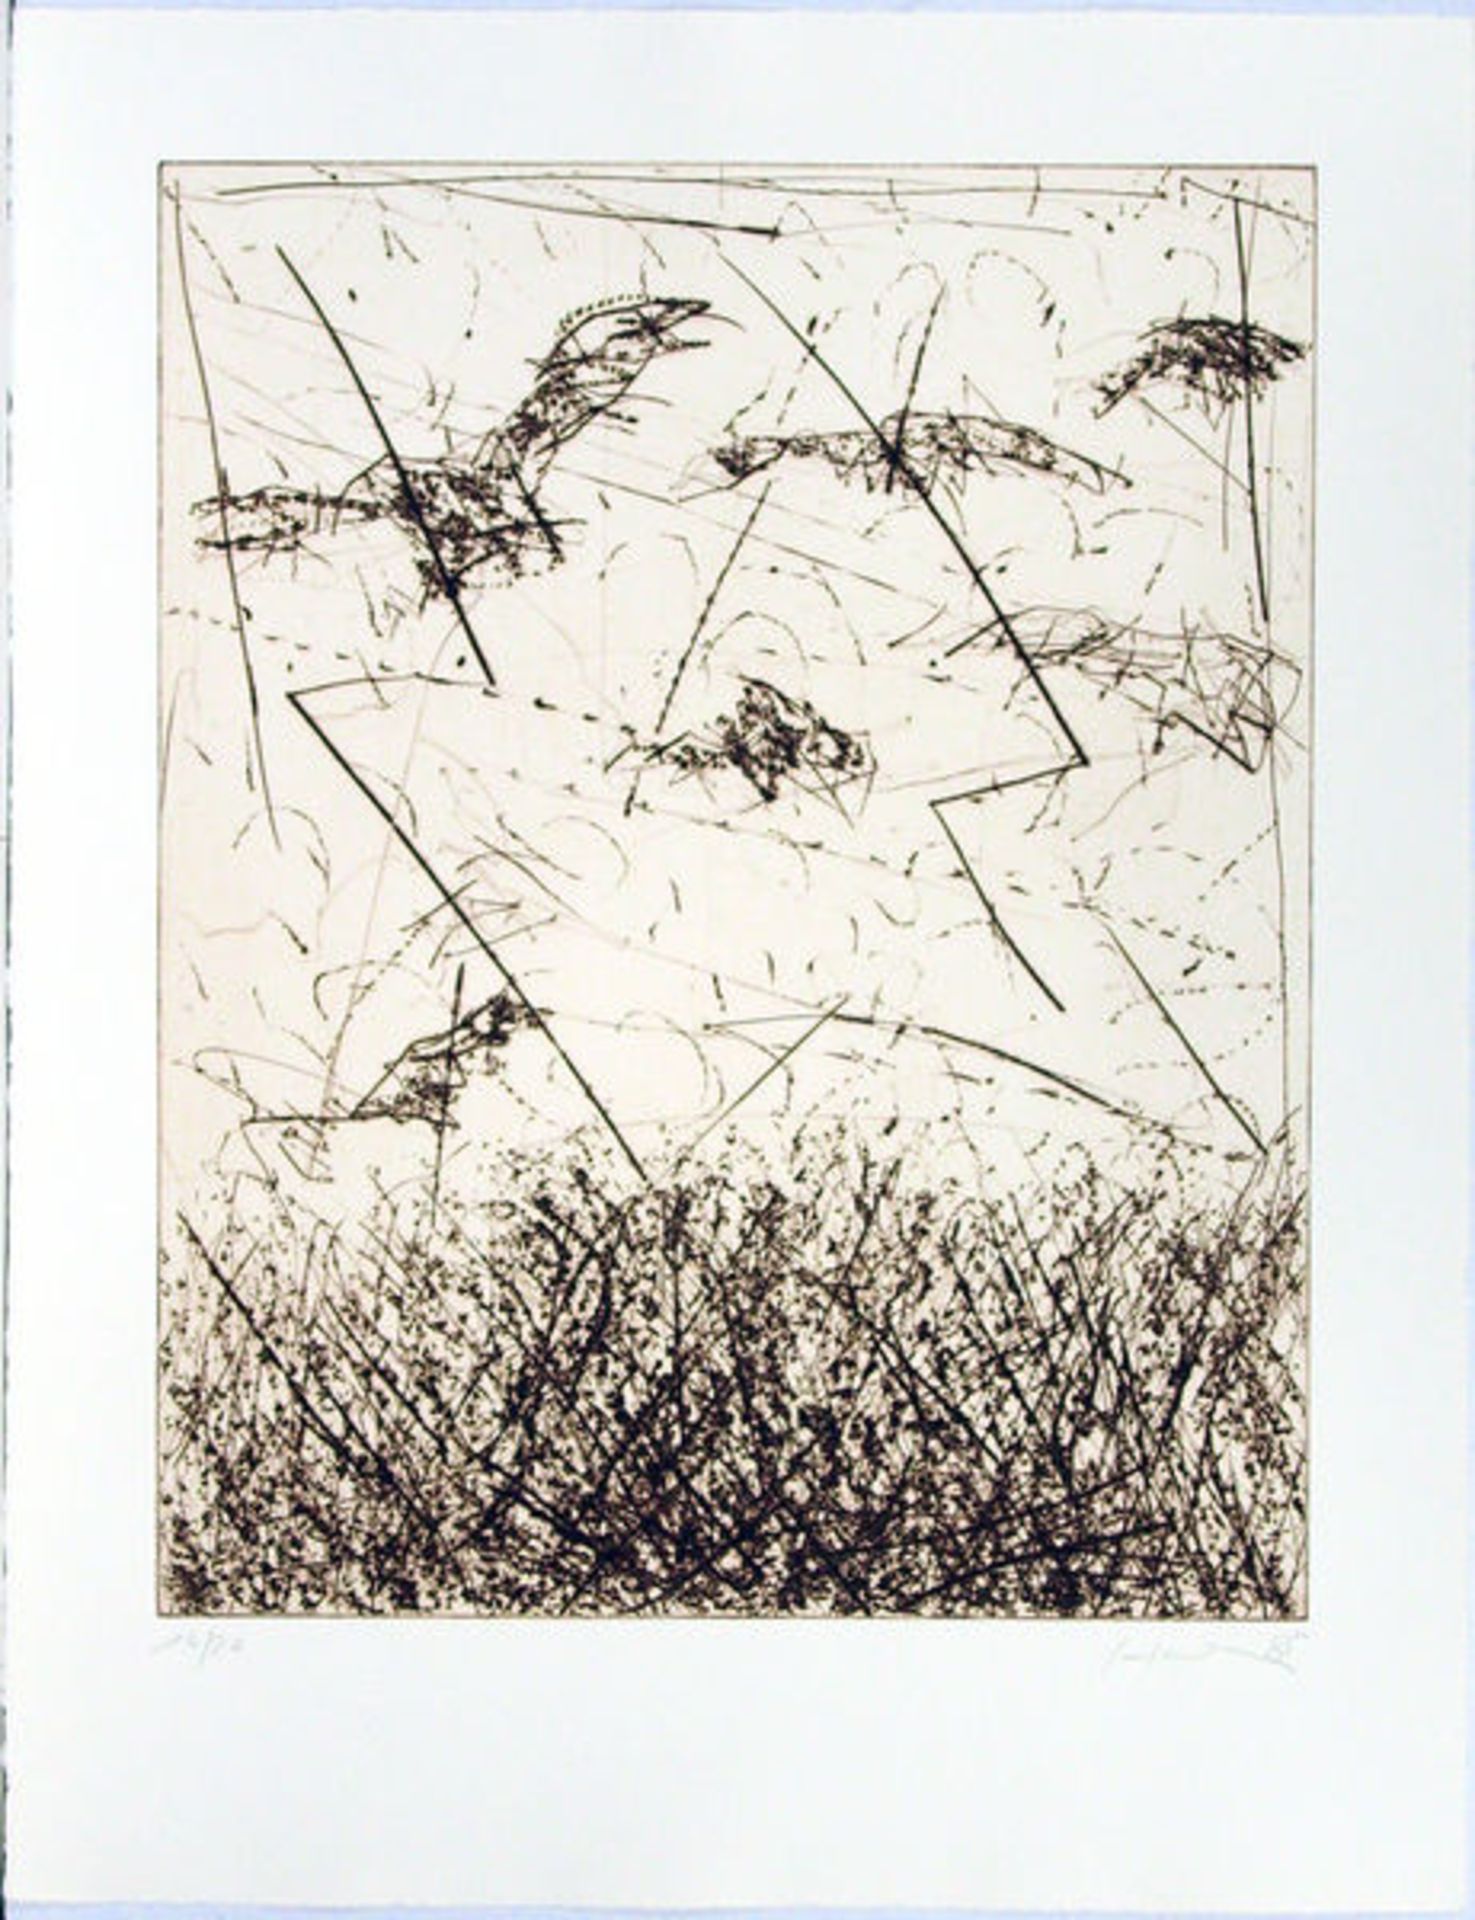 Krähenschlag (1985)Catalogue raisonné Schilling 37 - 42. Portfolio with 6 etchings on handmade